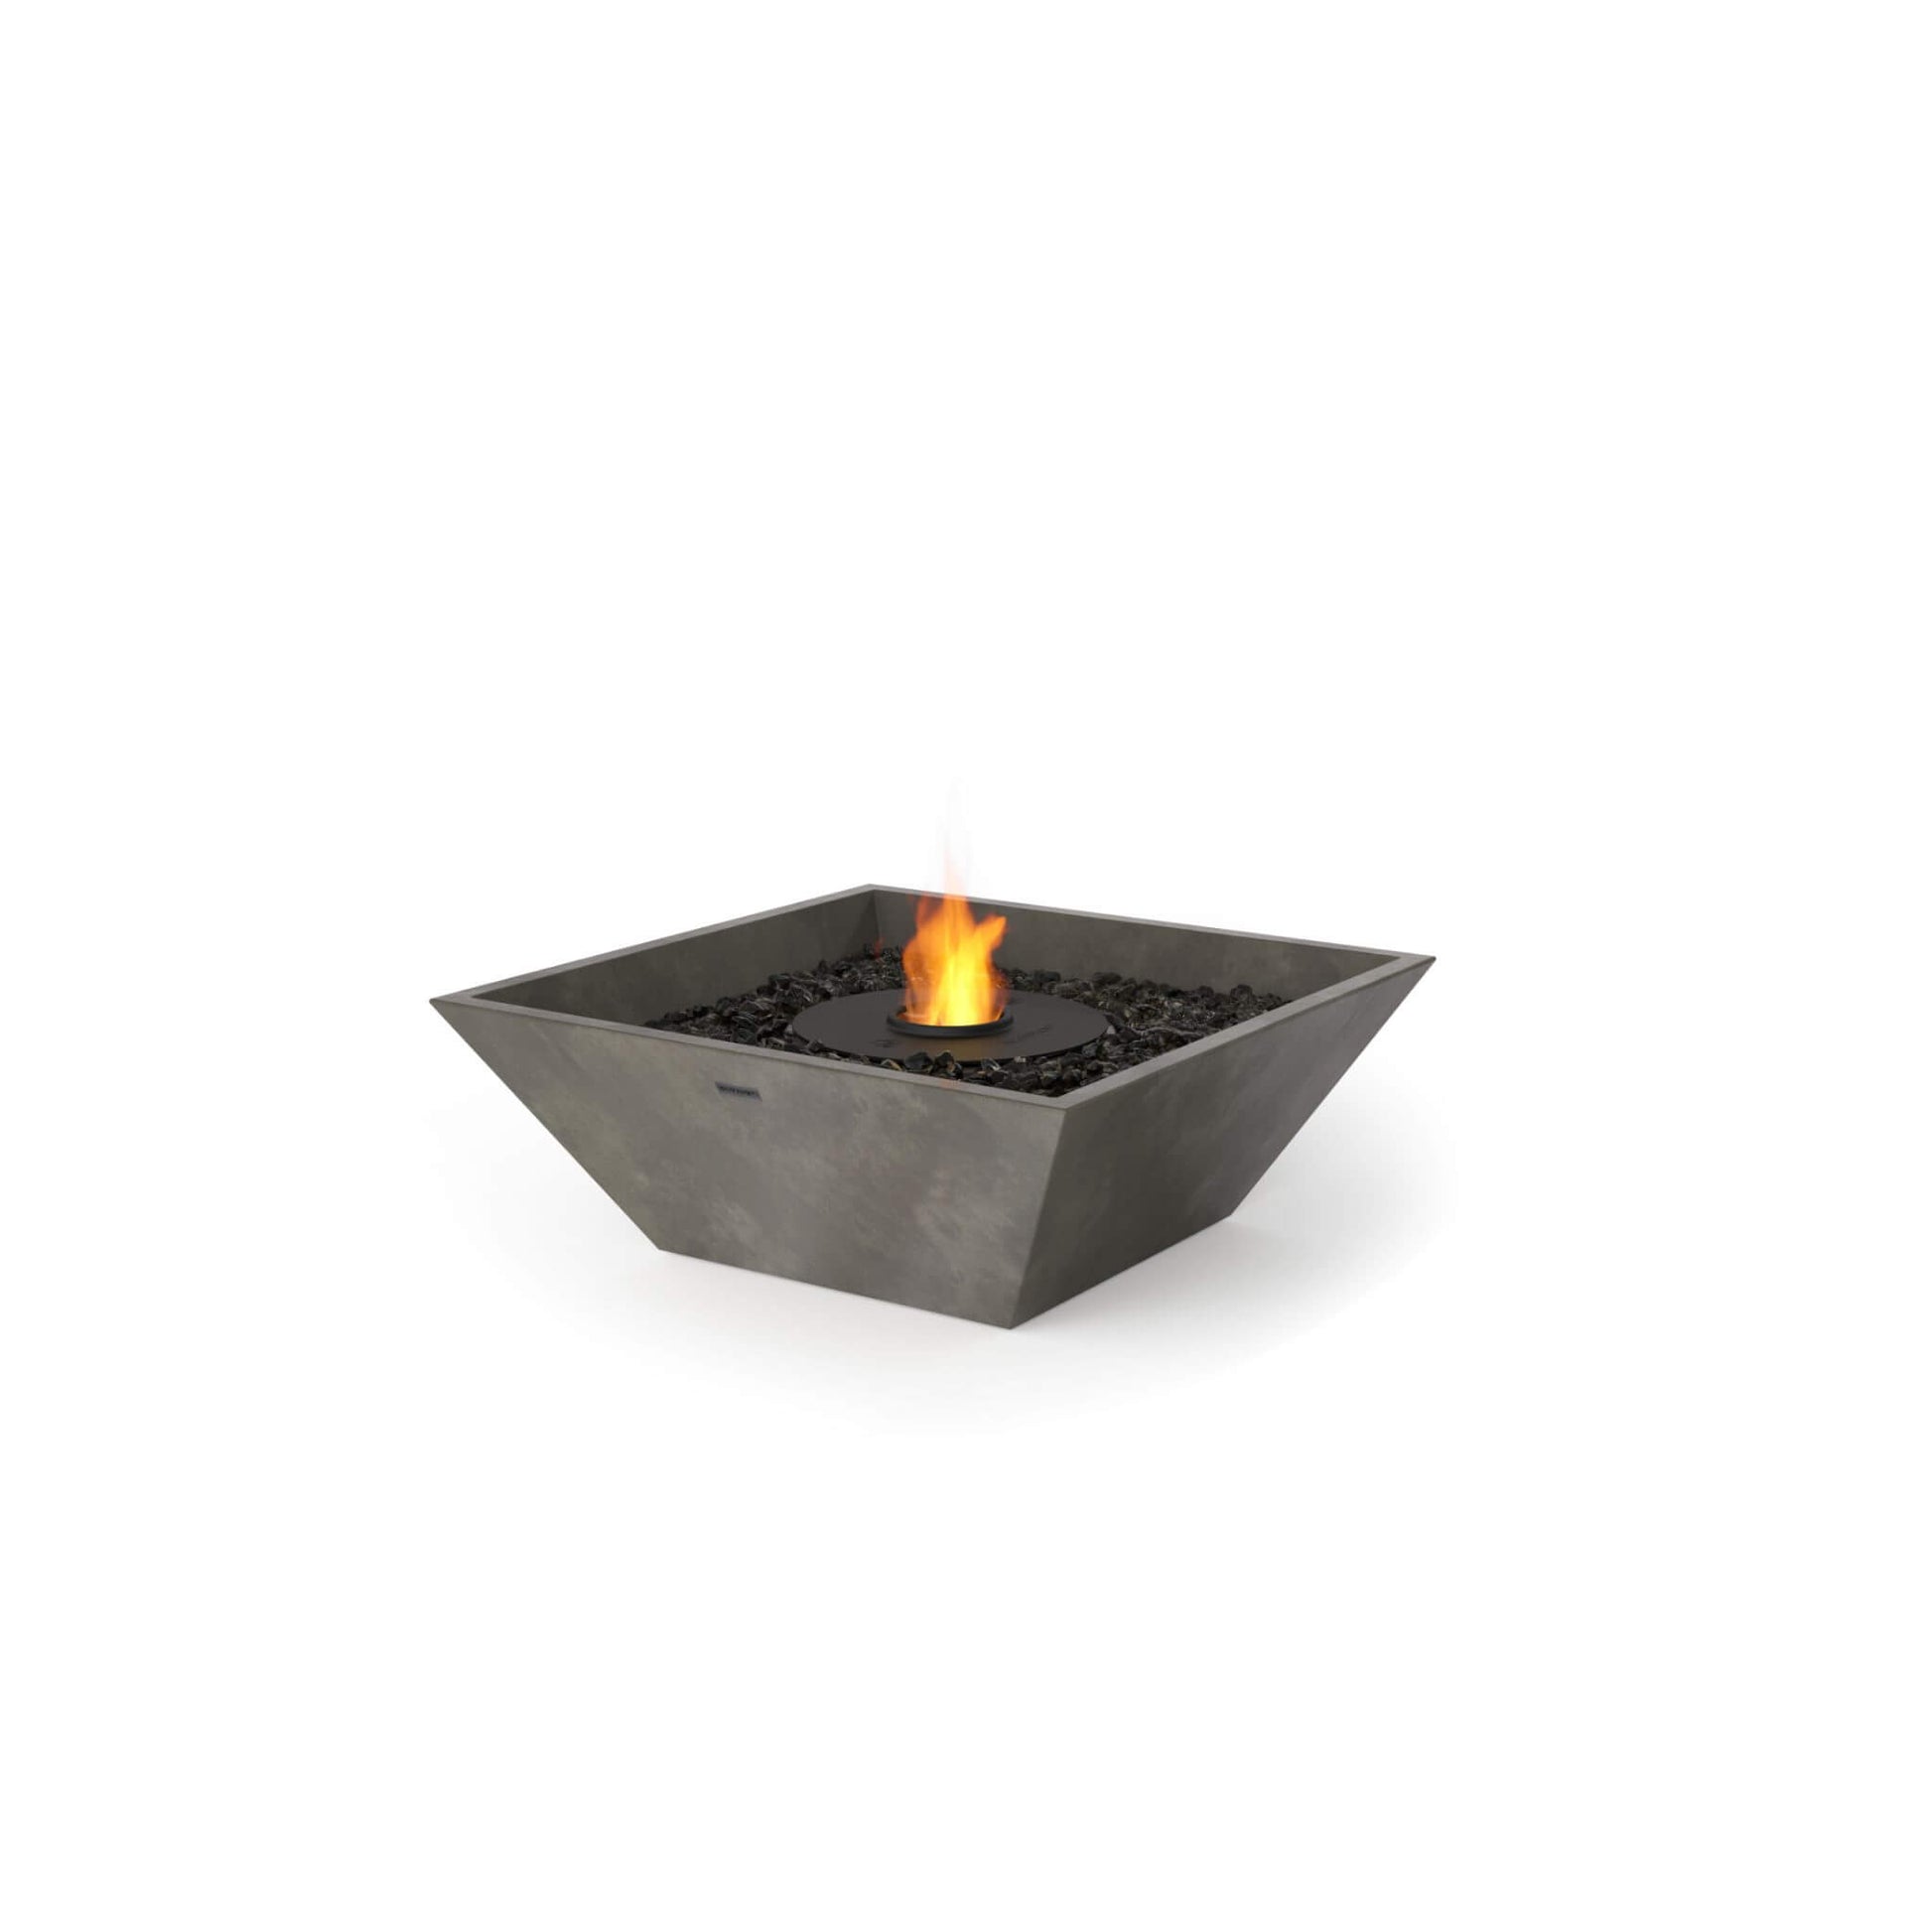 Ecosmart Fire Nova 600 bioethanol garden fire pit square bowl in concrete grey with black steel ethanol burner